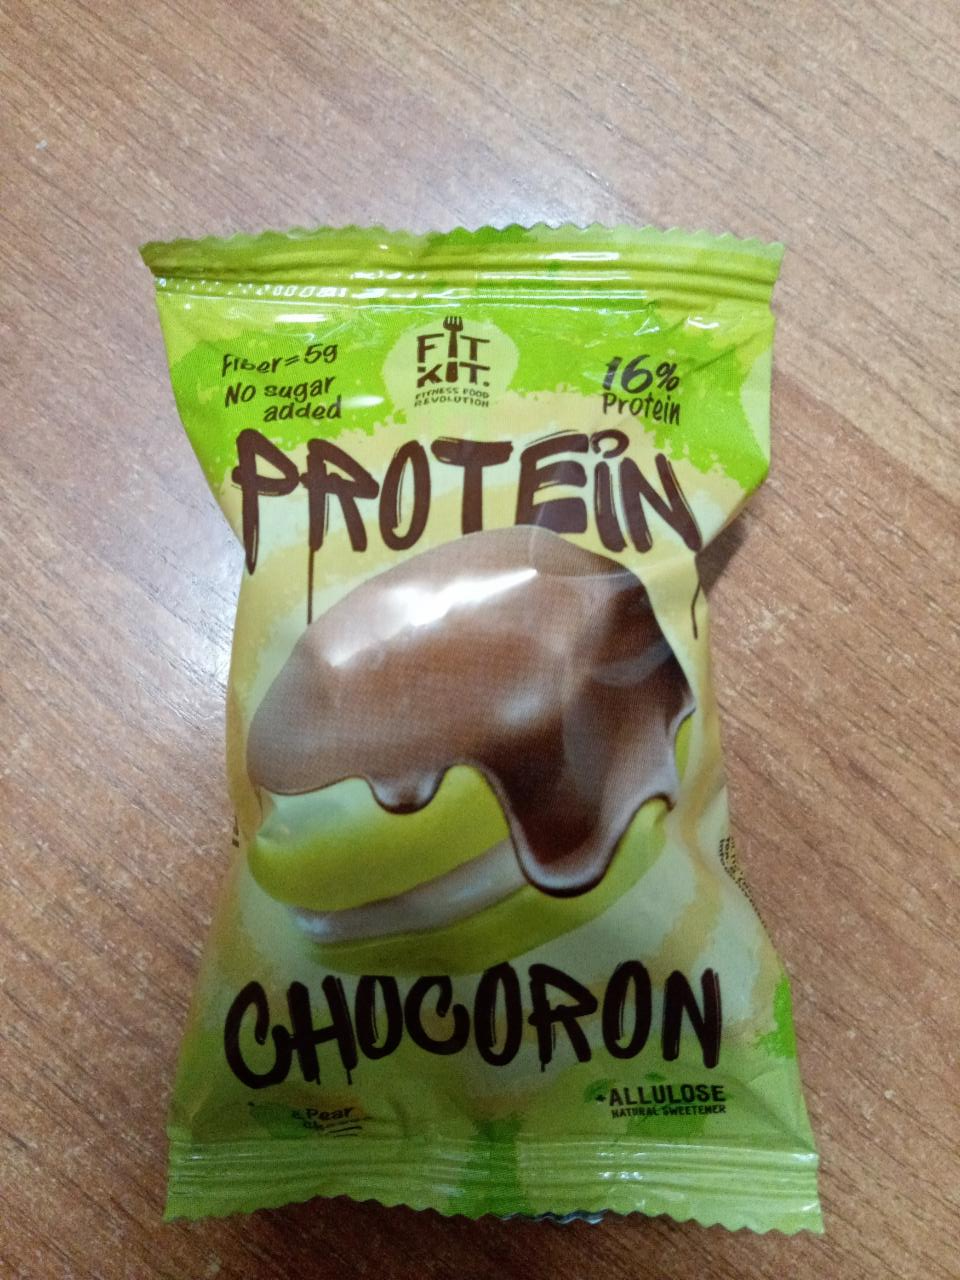 Фото - Протеиновое печенье со вкусом груша сыр Protein chocoron Fit Kit